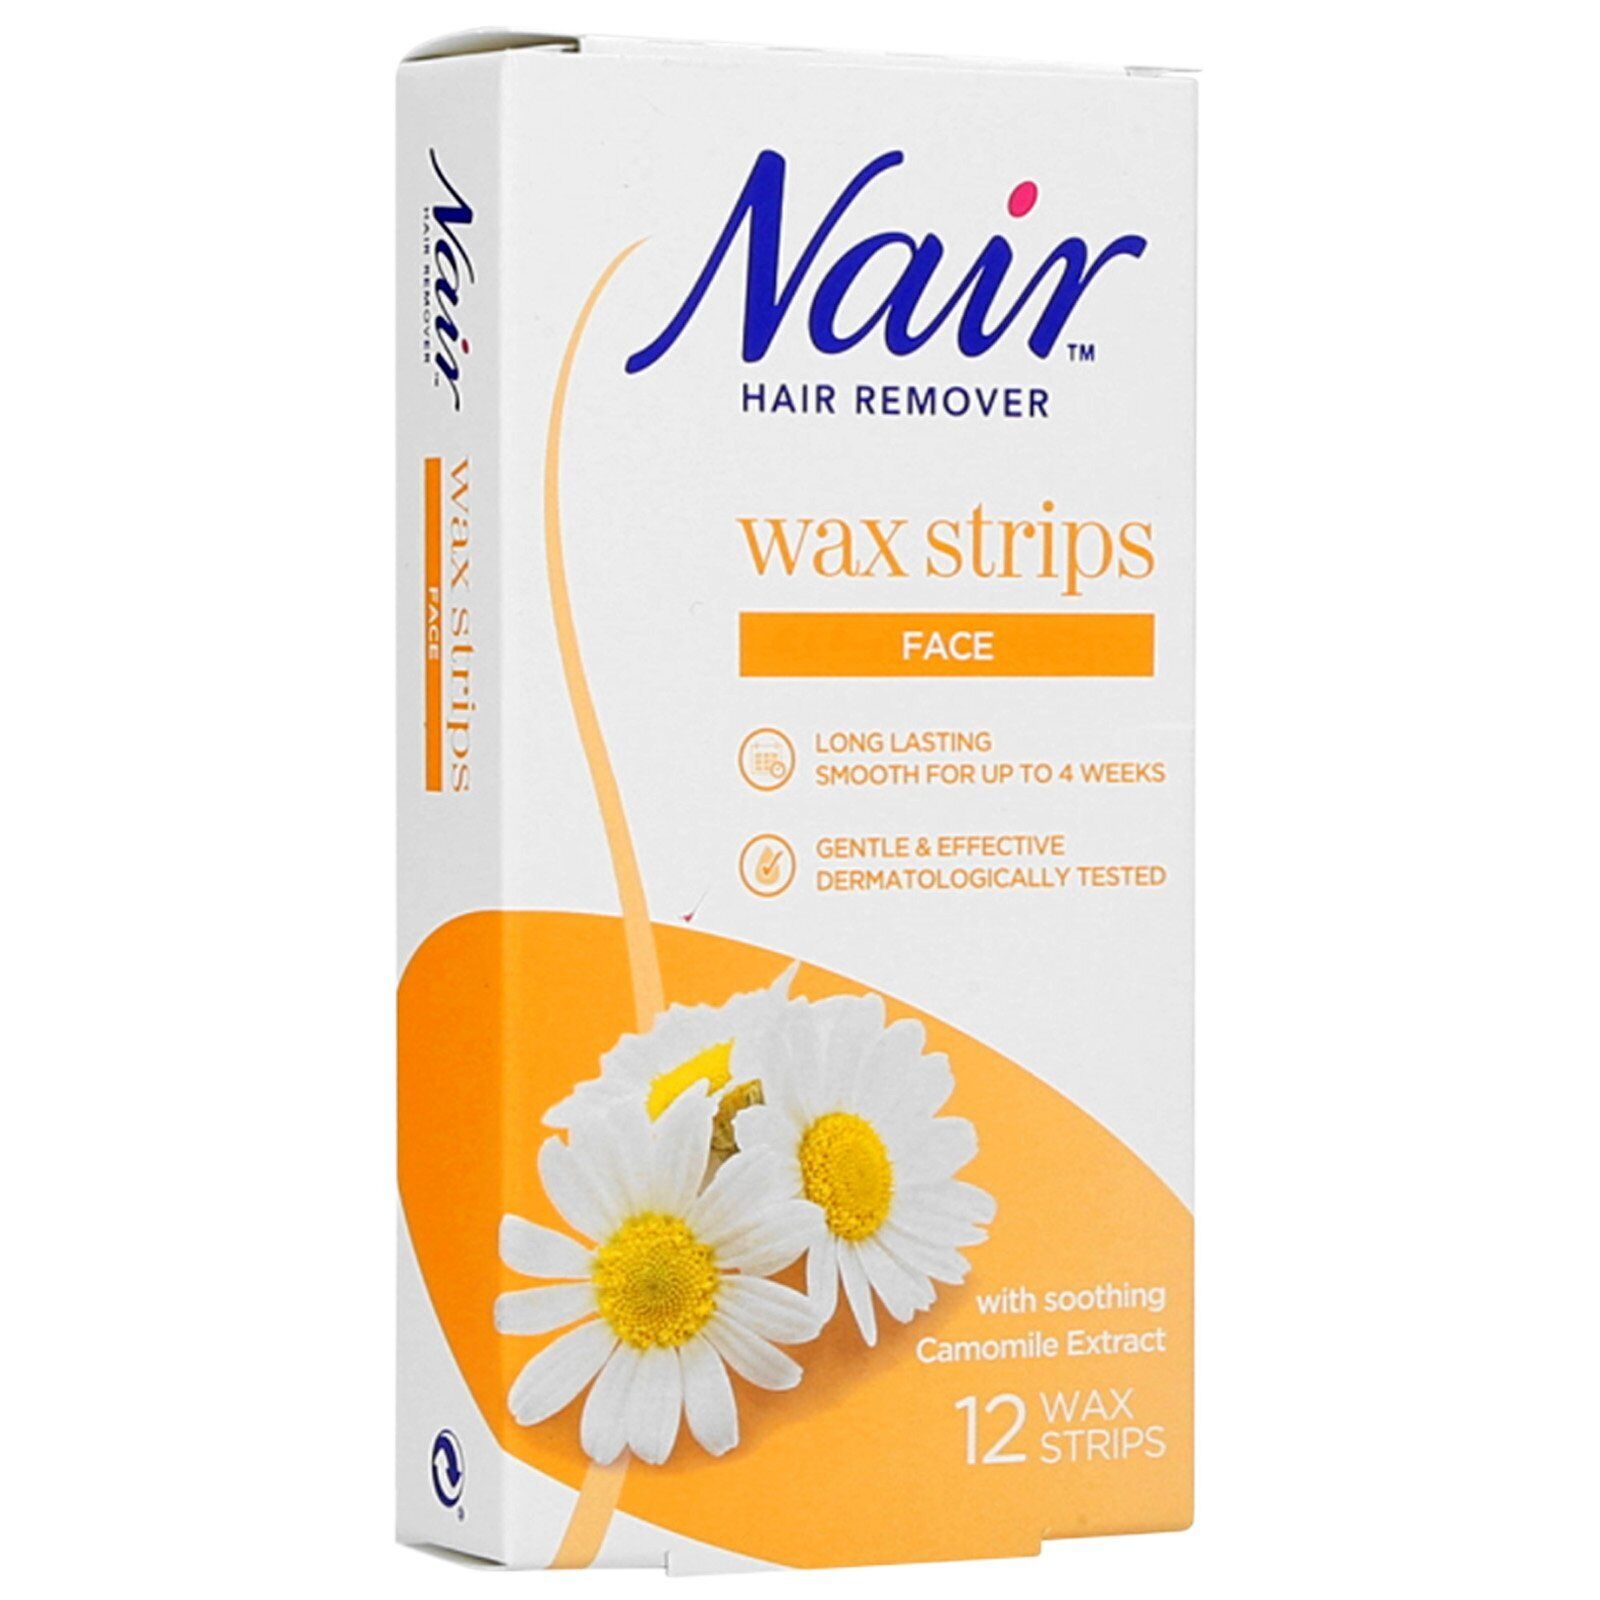 NAIR HAIR REMOVER FACE SENSITIVE SKIN WAX STRIPS 12 PIS